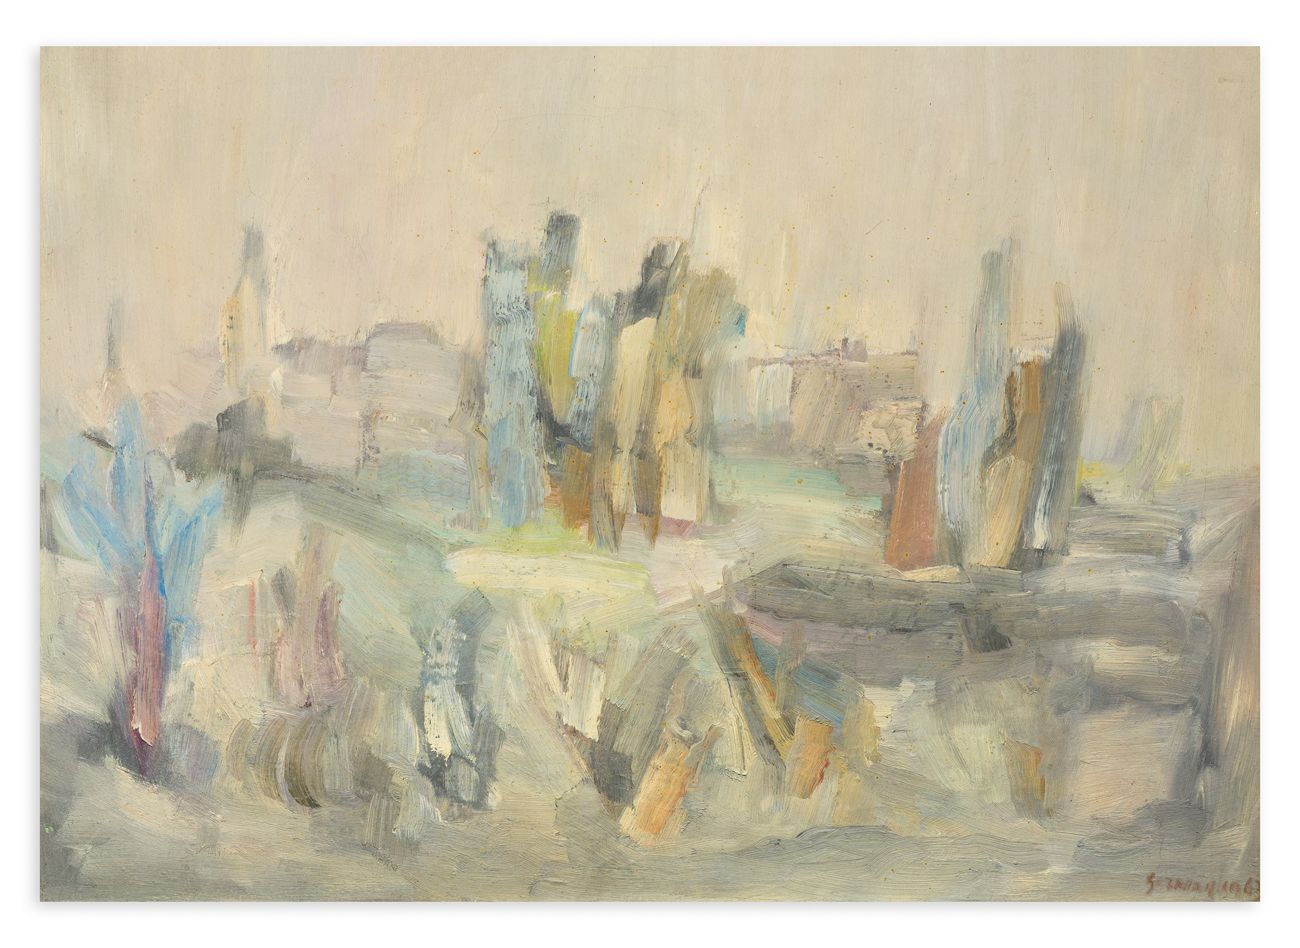 RINO SERNAGLIA (1936) - Paesaggio, 1963 Óleo sobre lienzo

cm 50x70

Firma y fec&hellip;